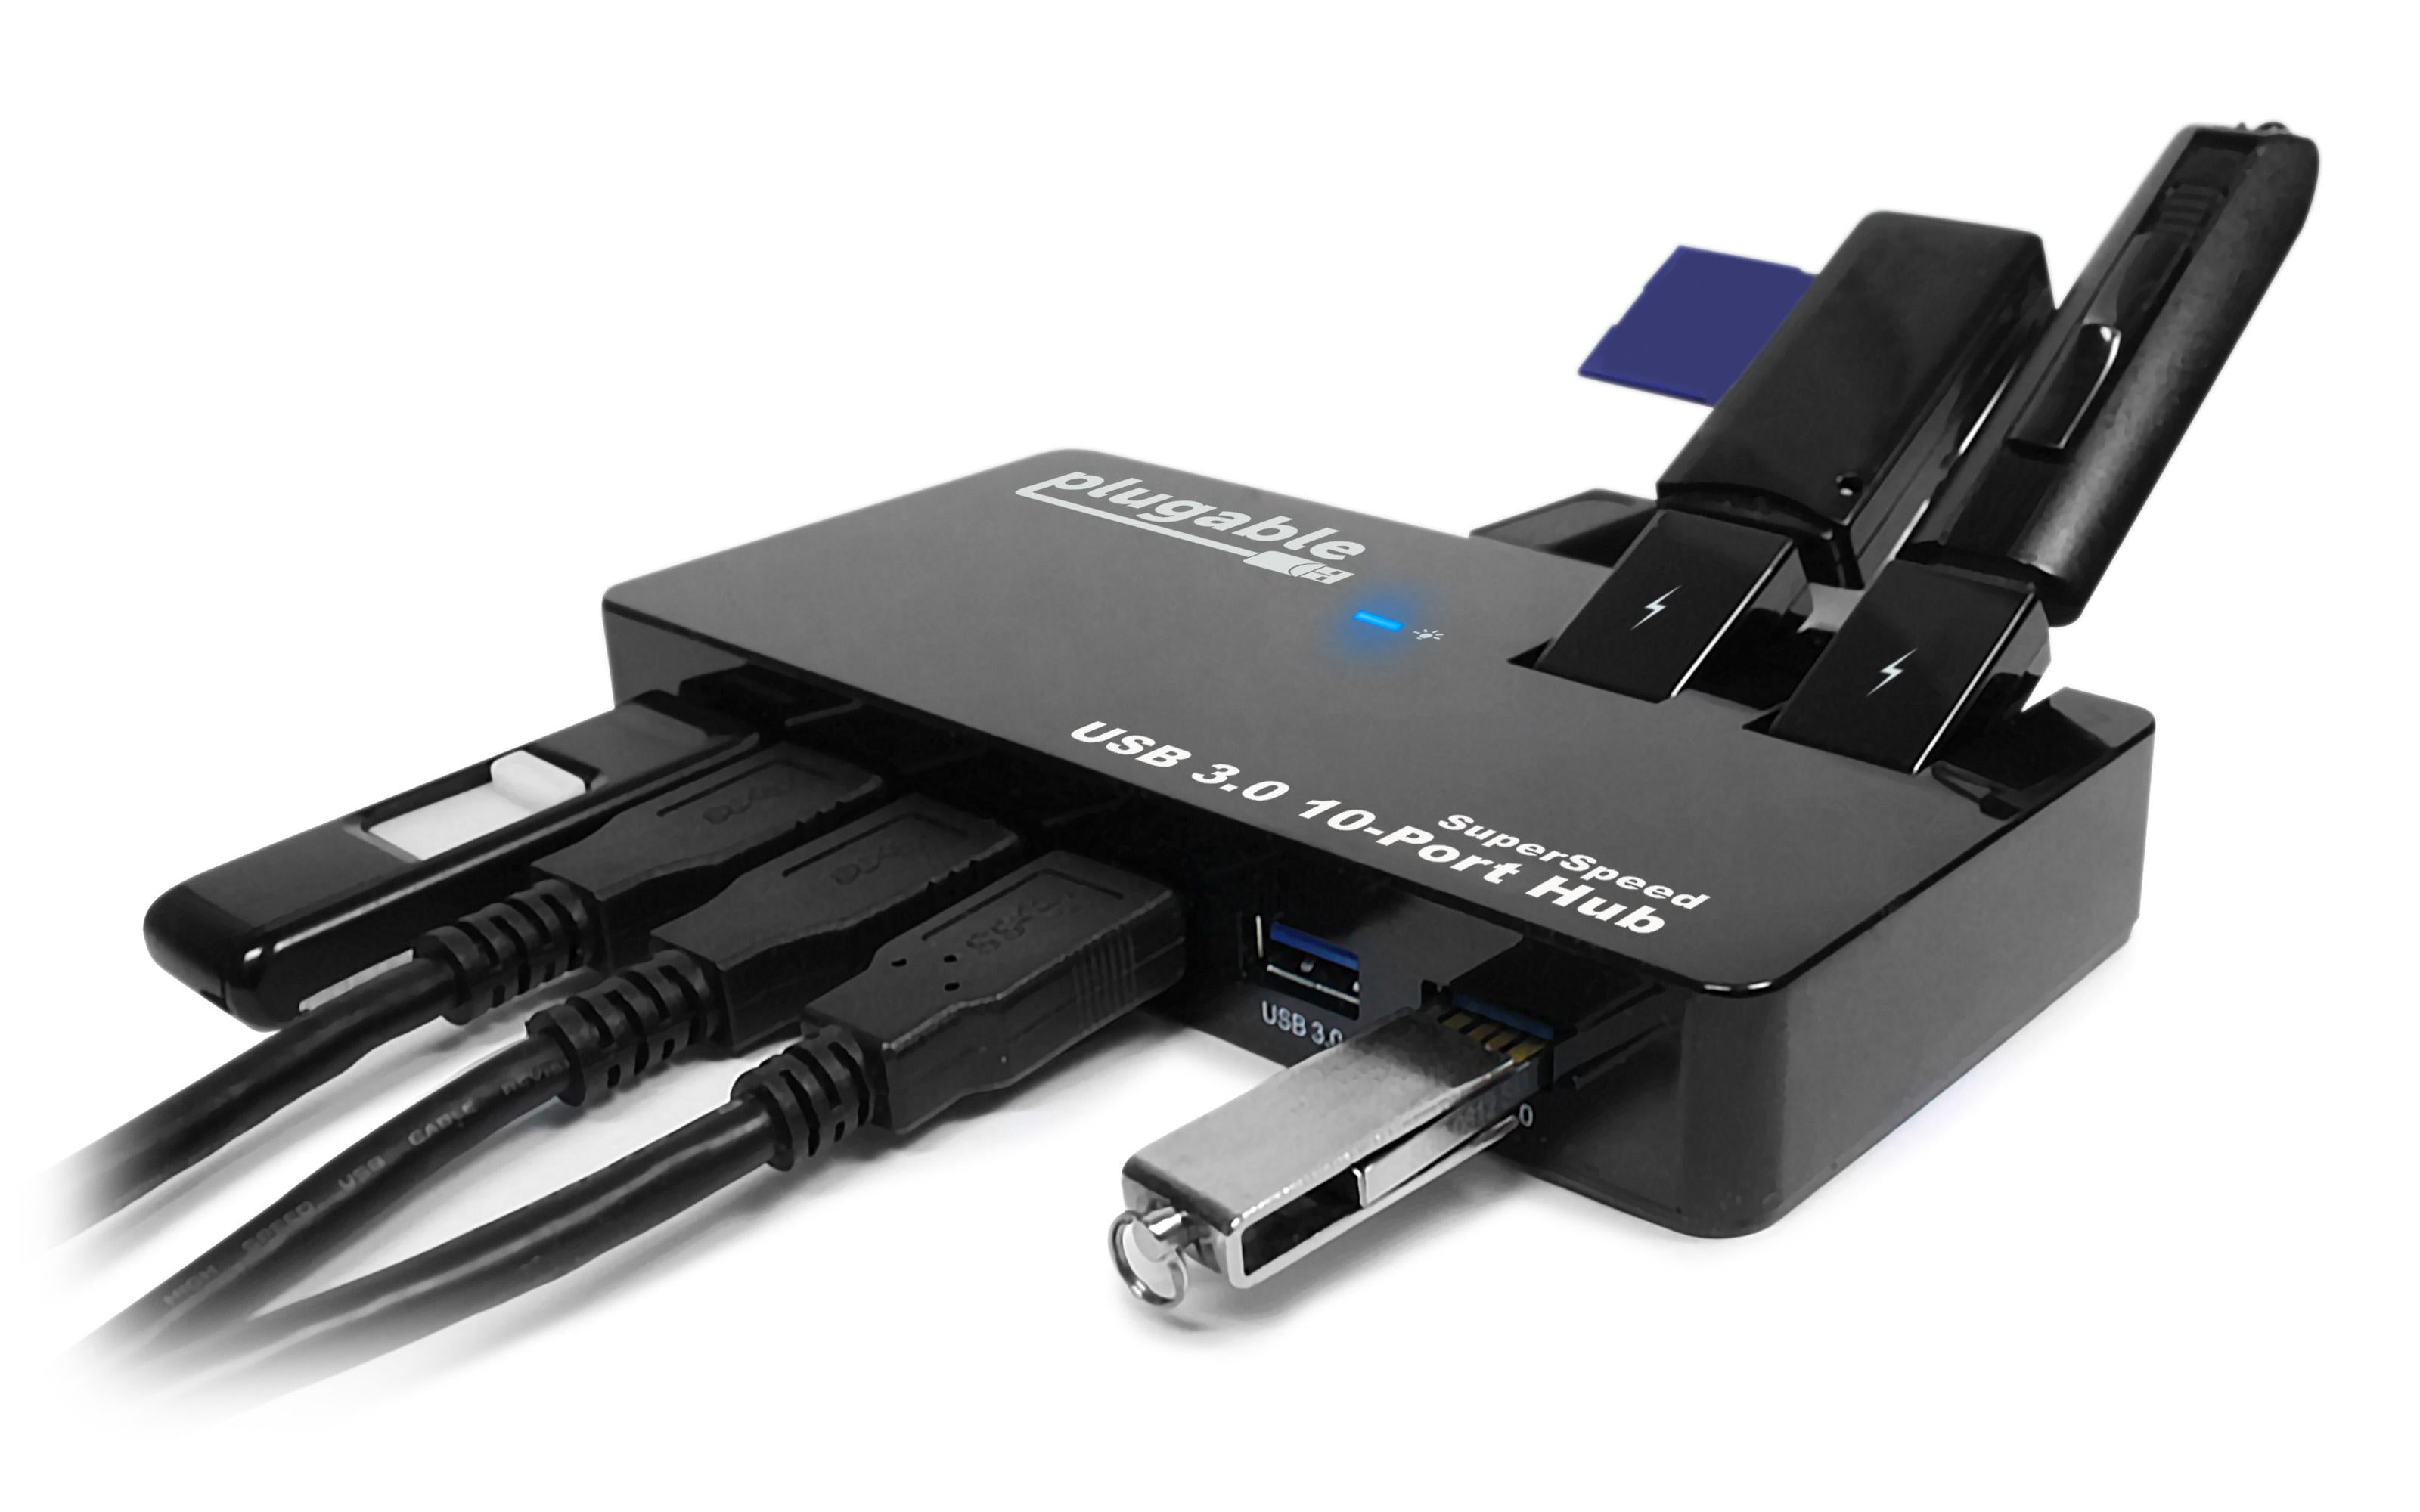 USB 3.0 10-Port Hub